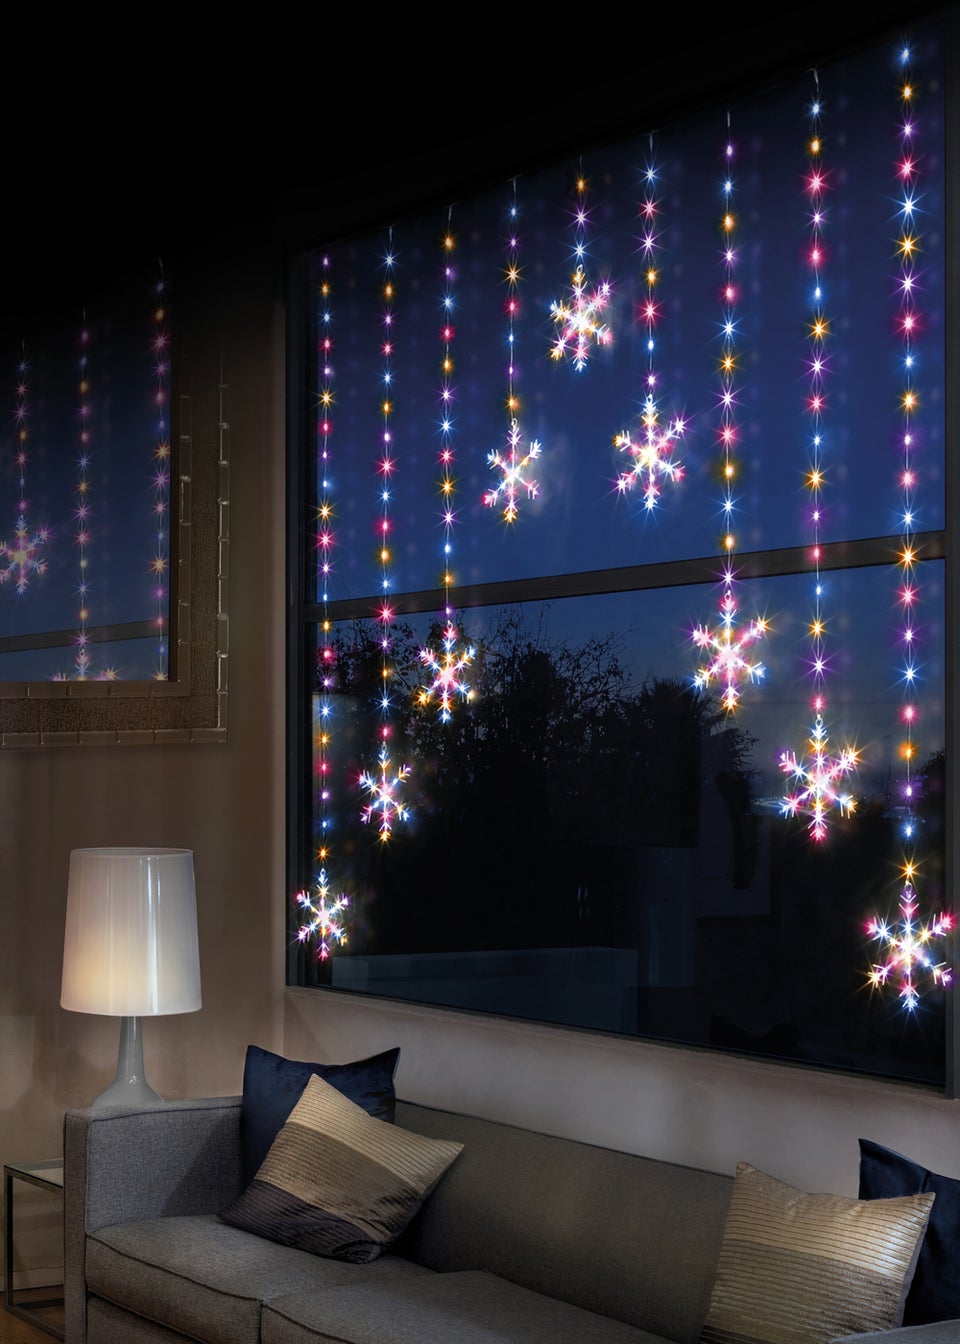 Premier Decorations 339 Rainbow LED Snowflake Curtain Lights